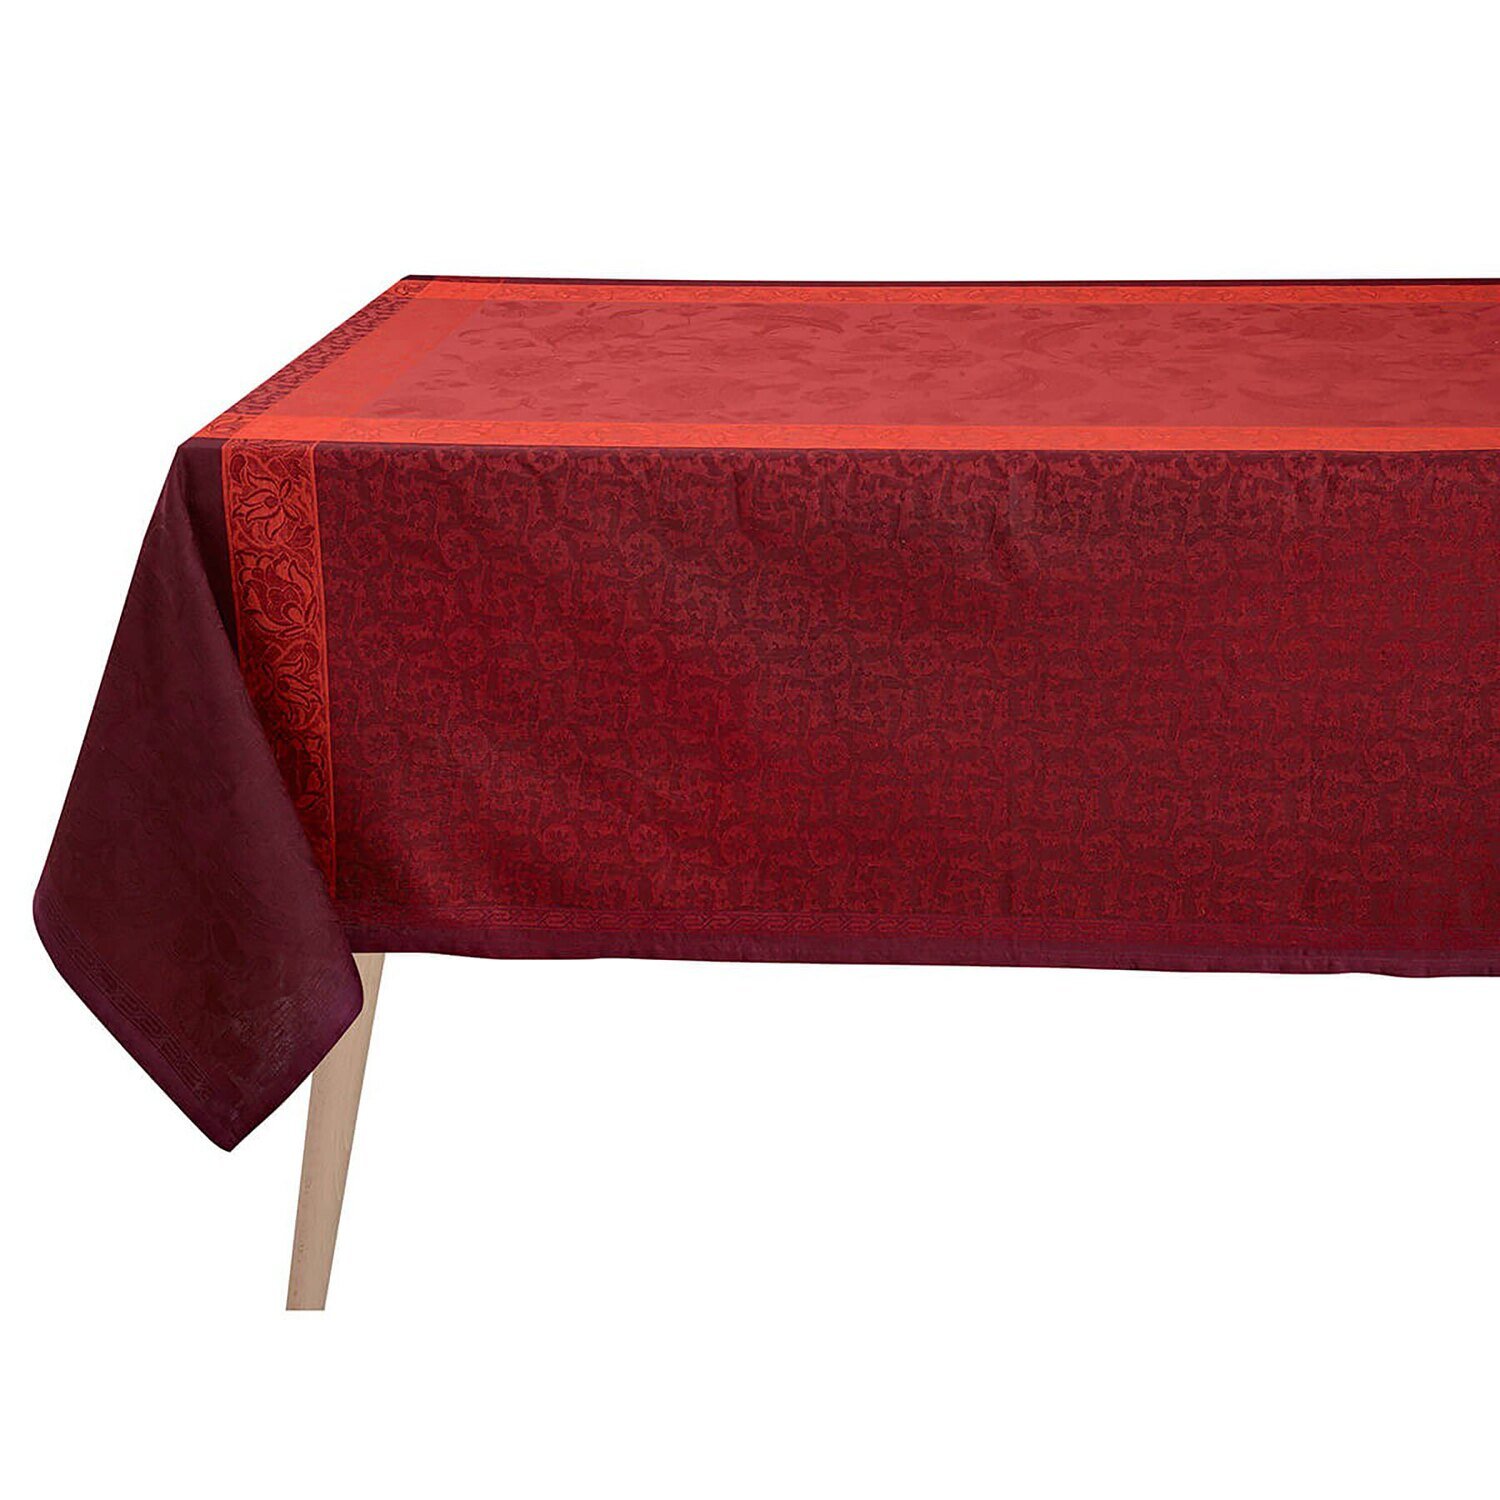 Le Jacquard Tablecloth Ottomane Burgundy 175 x 175 100% Linen 26535